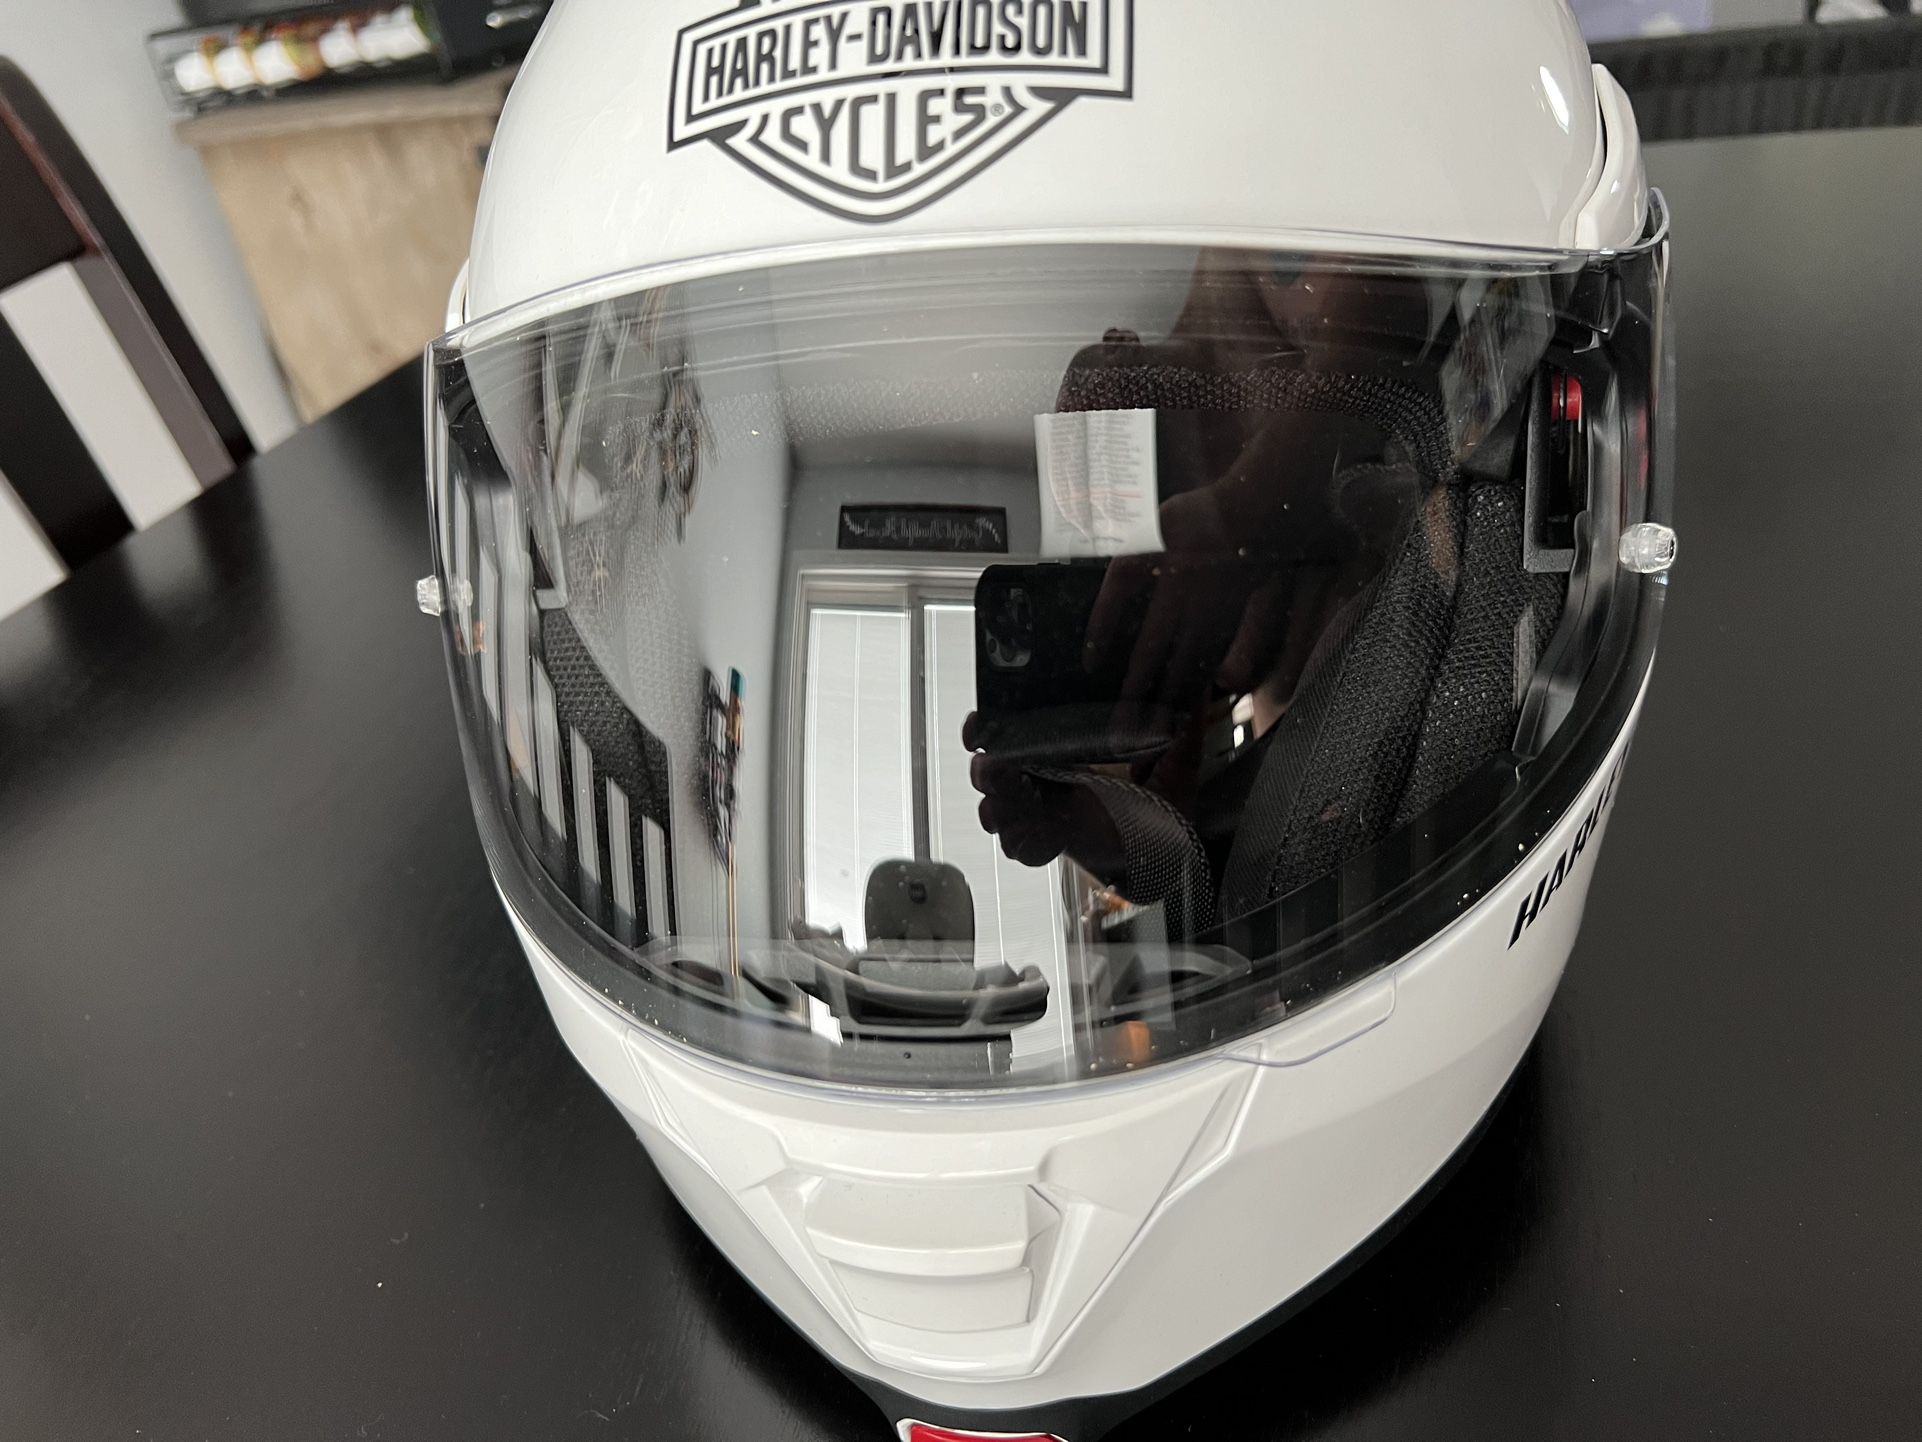 New Harley Davidson Helmet